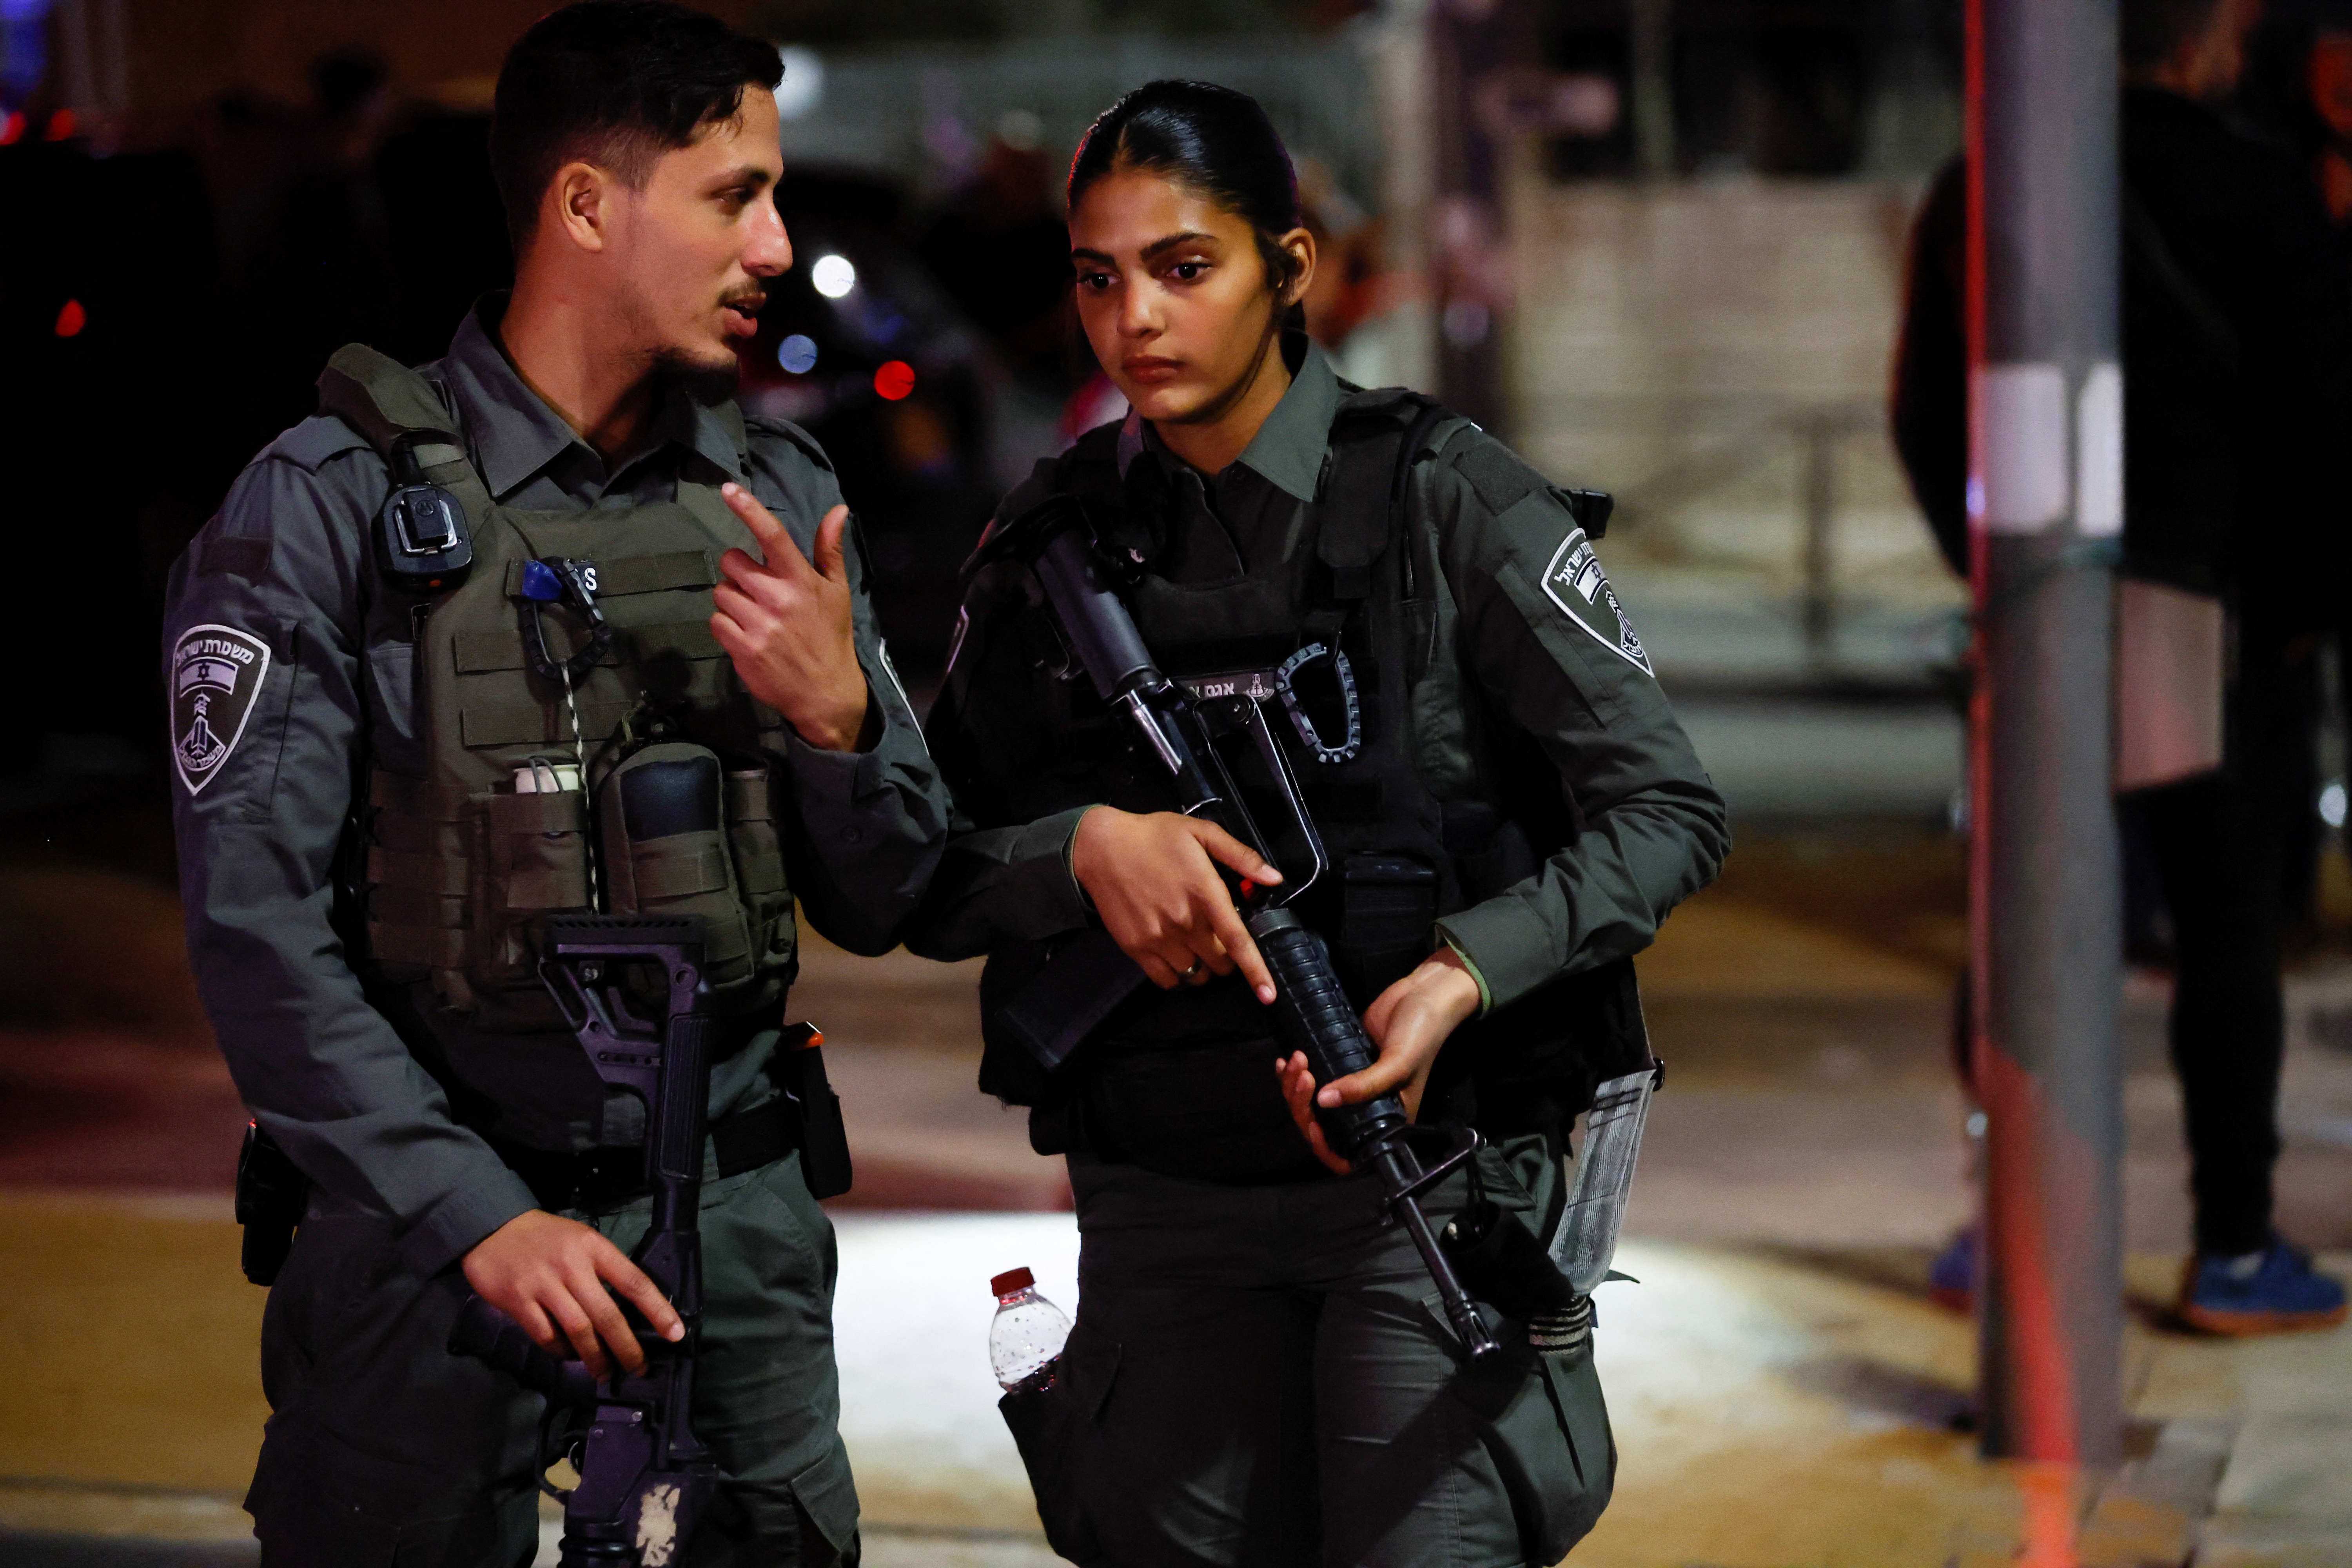 Shooting attack in Jerusalem